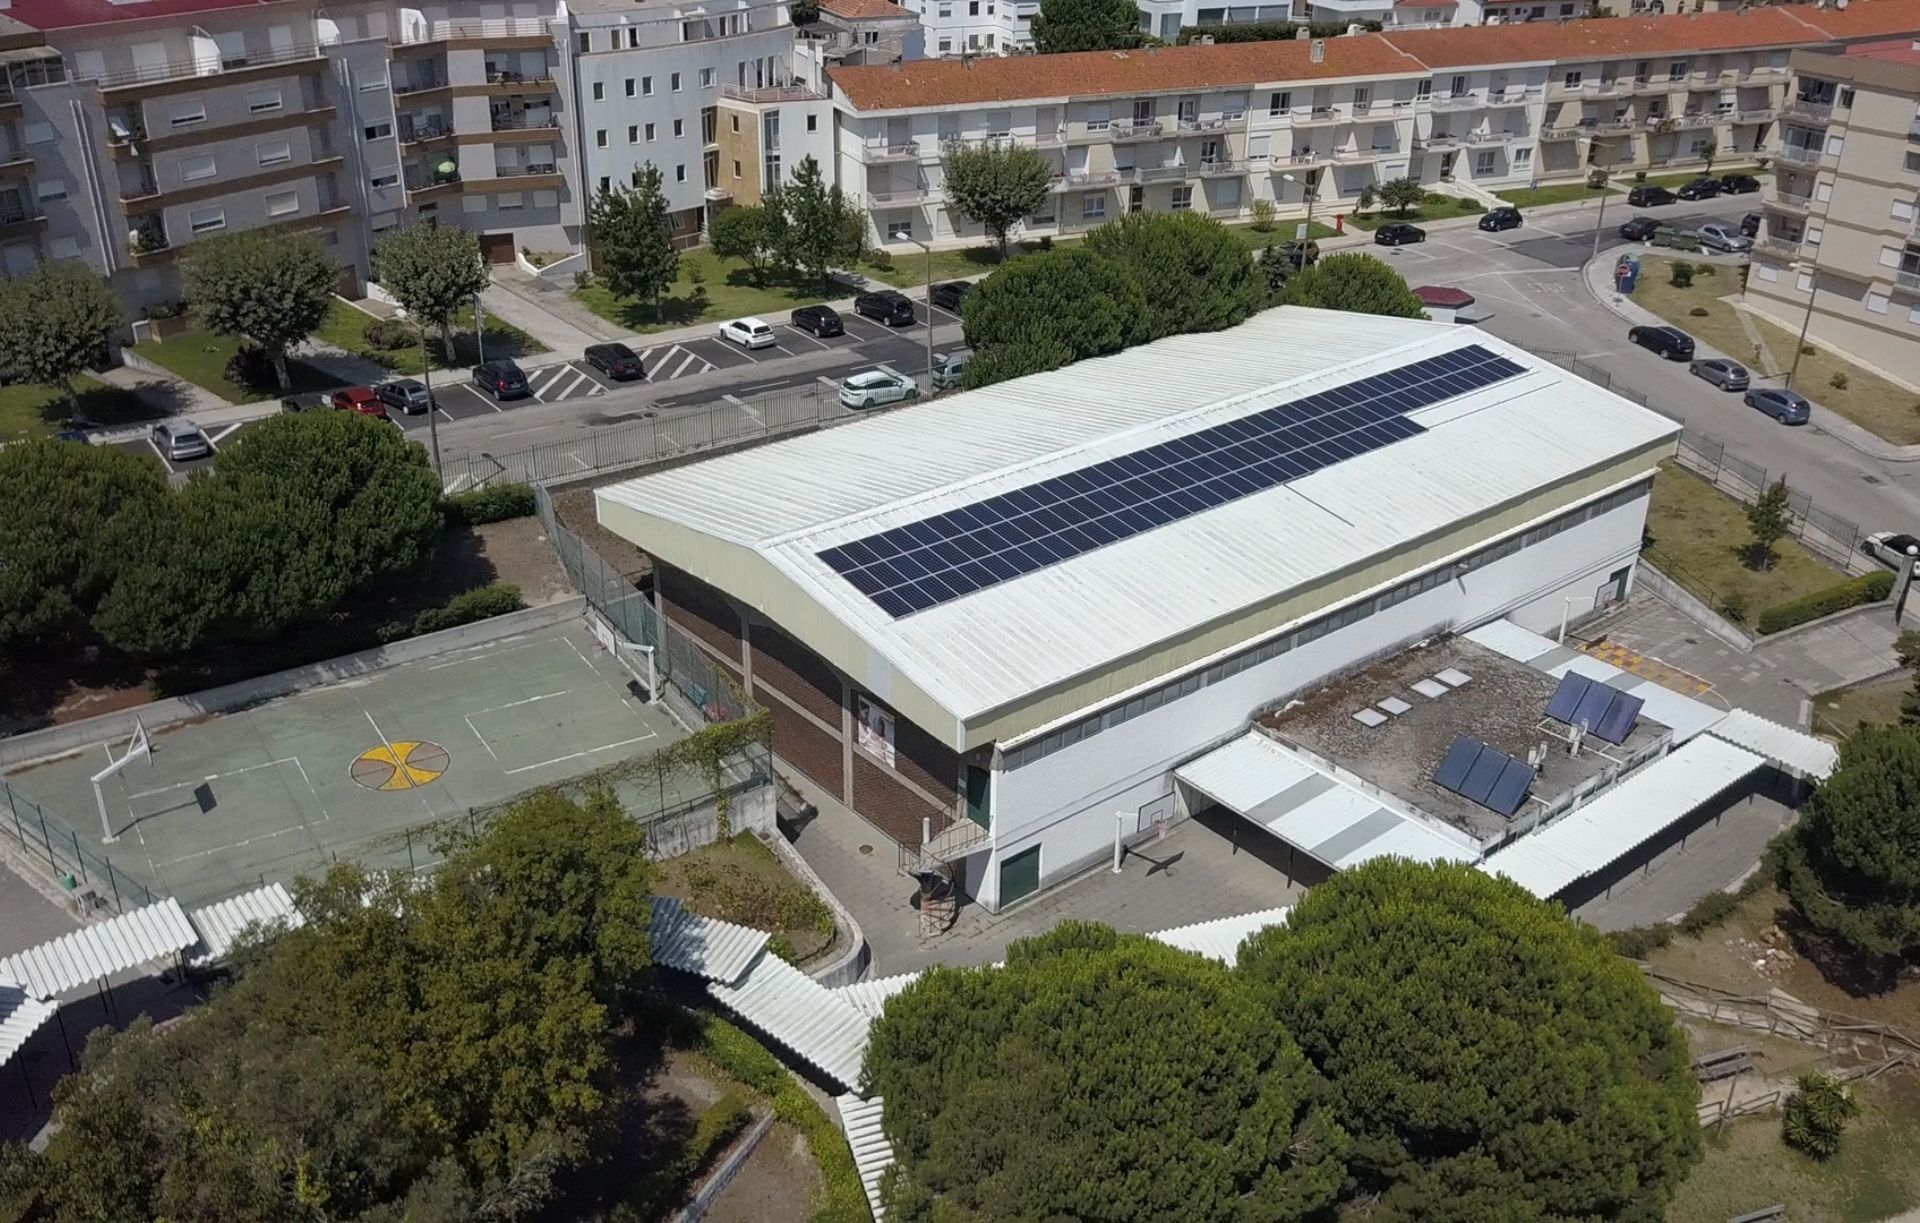 Escola da Figueira Da Foz (25 kWp)